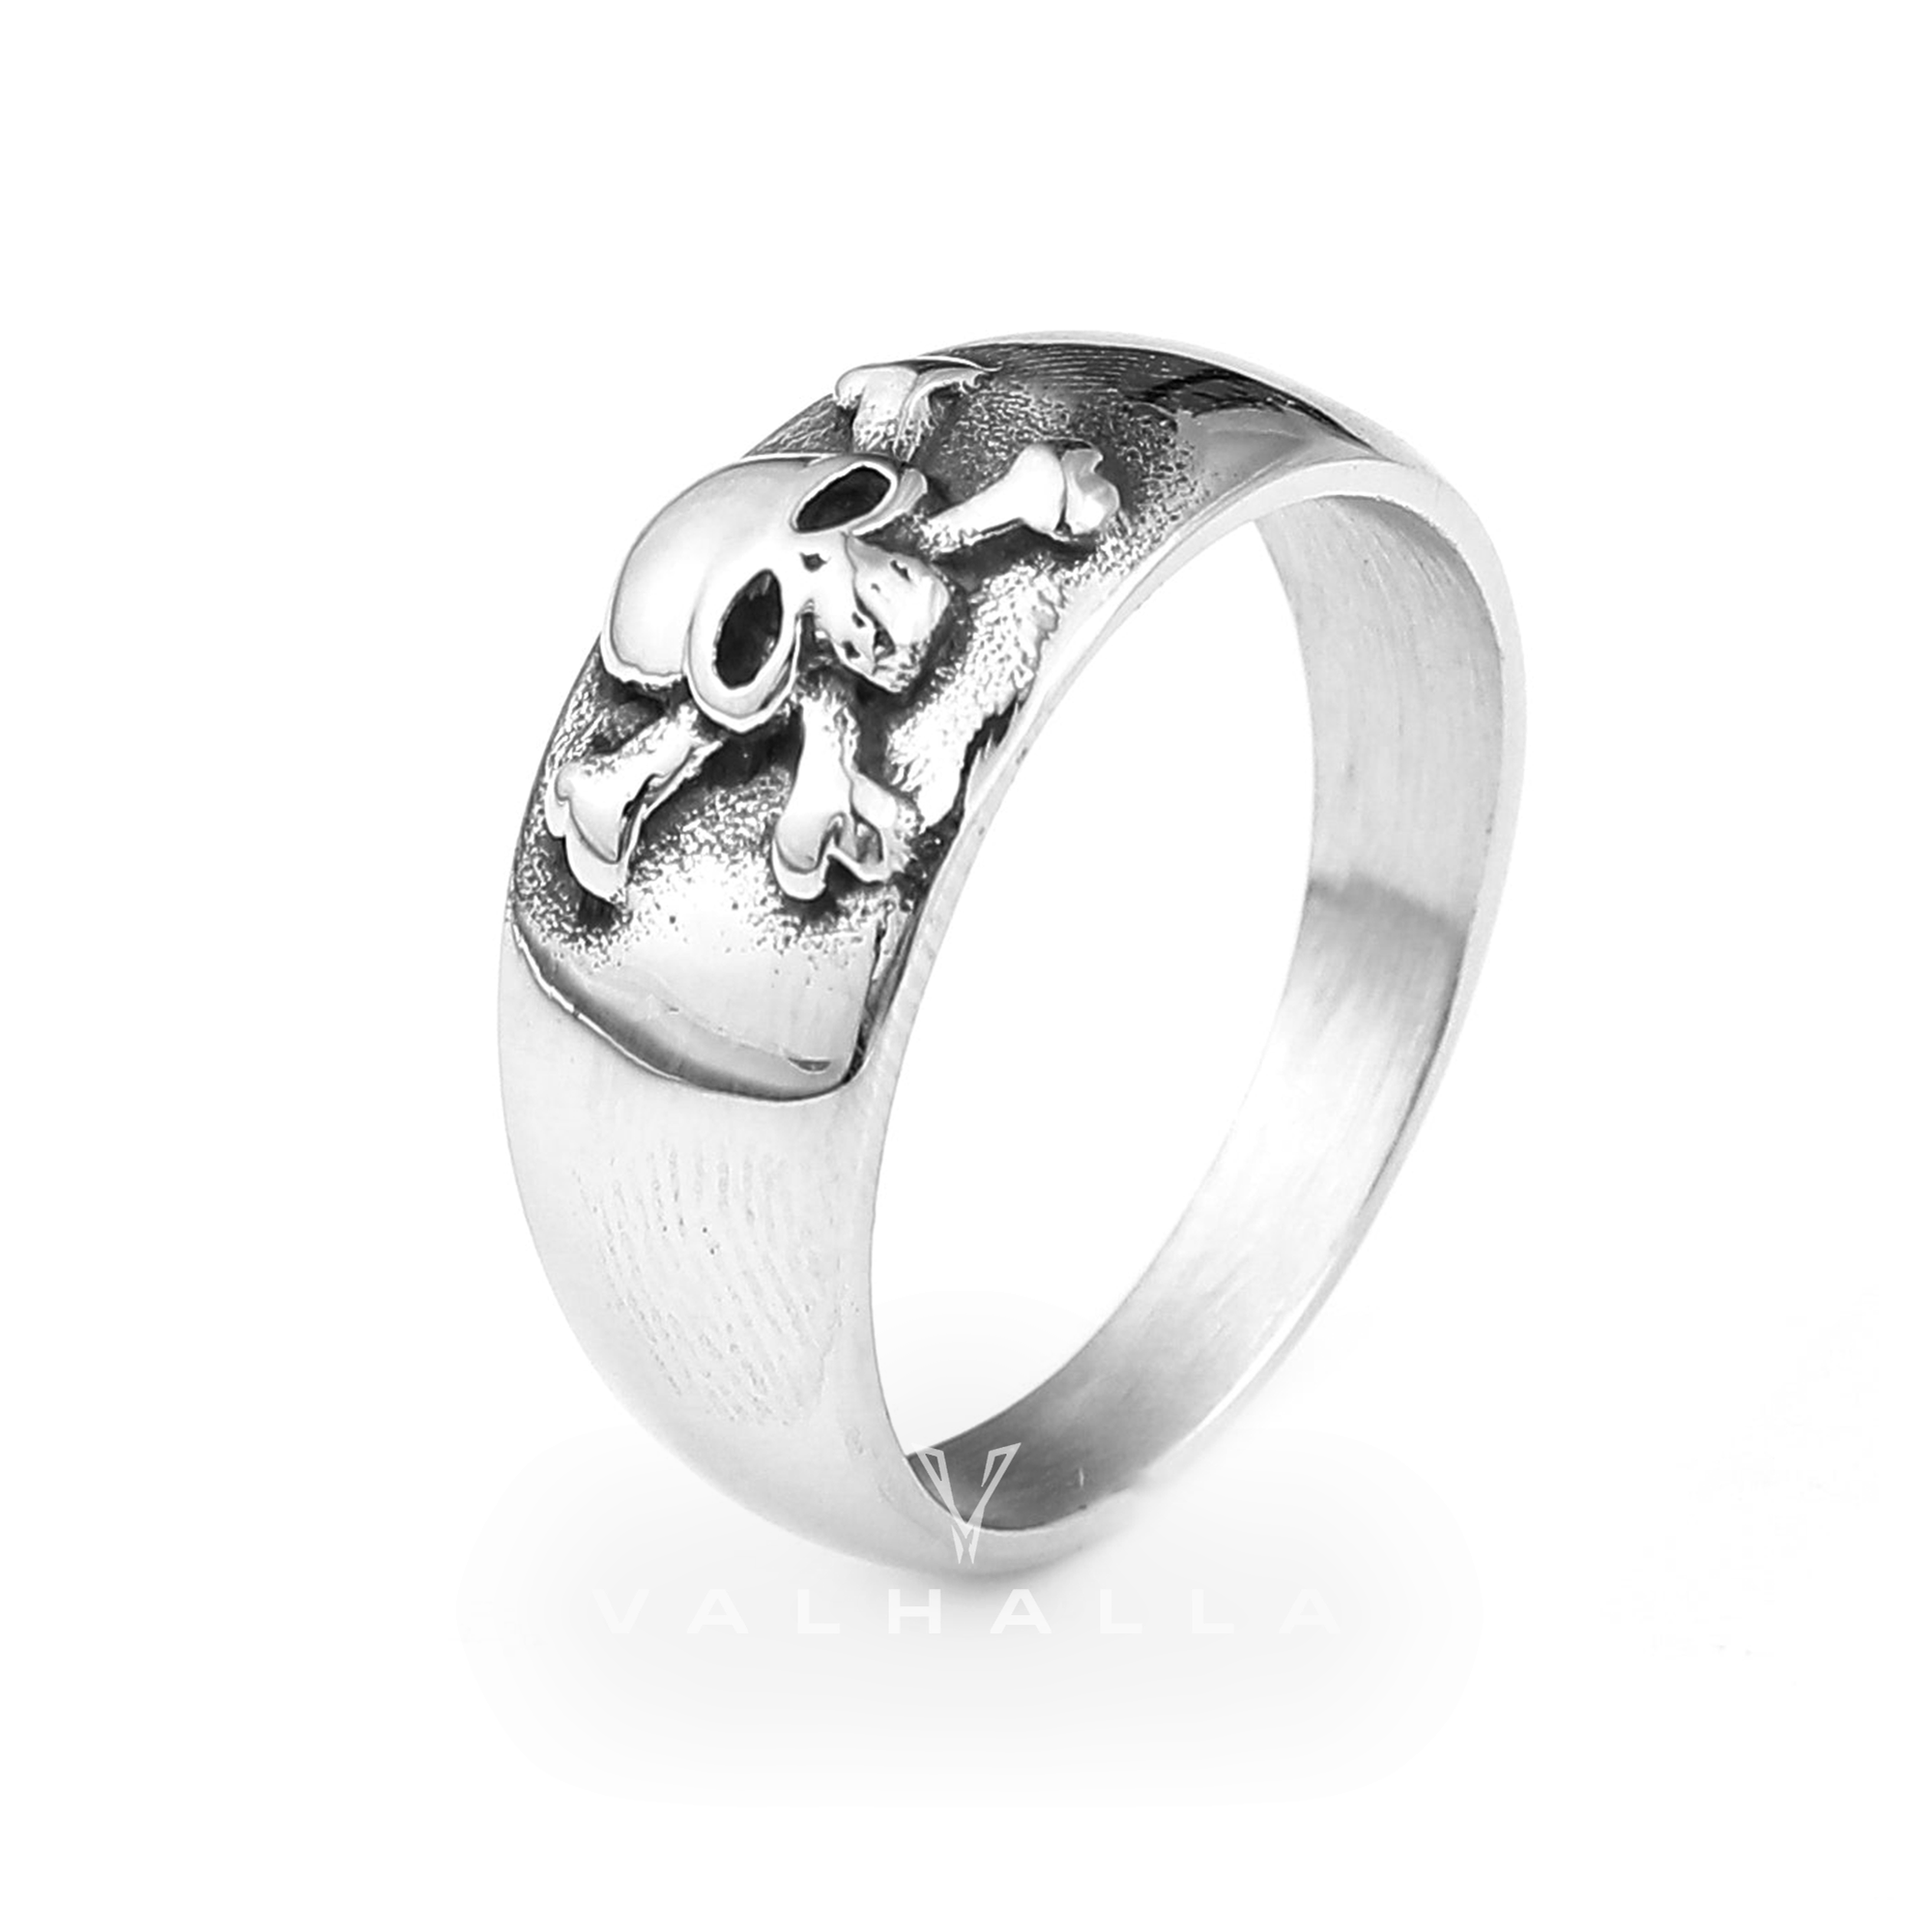 Skull and Crossbones Stainless Steel Ring